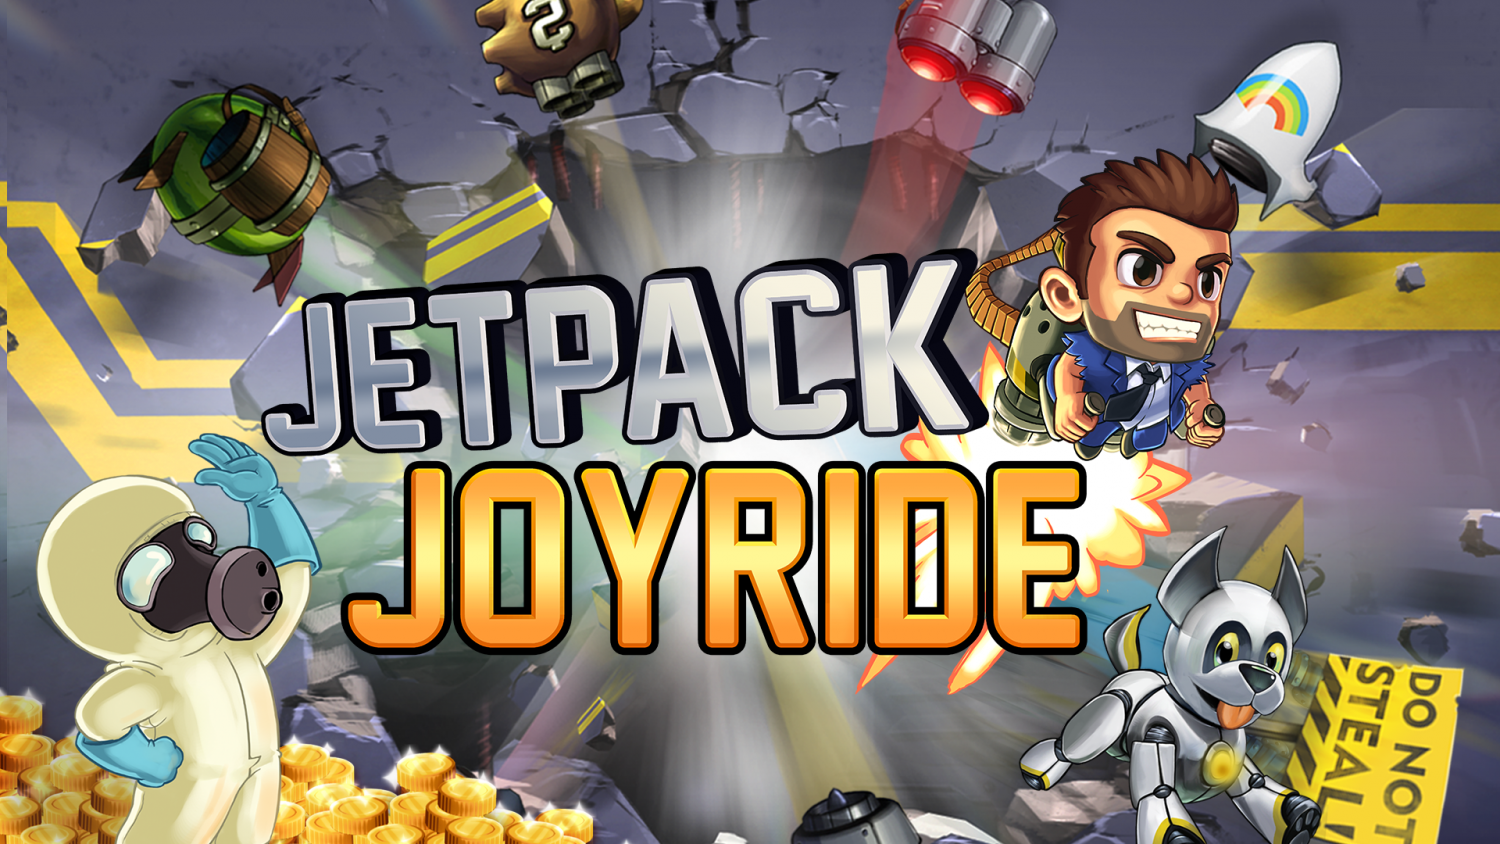 Jetpack+Joyride+Review